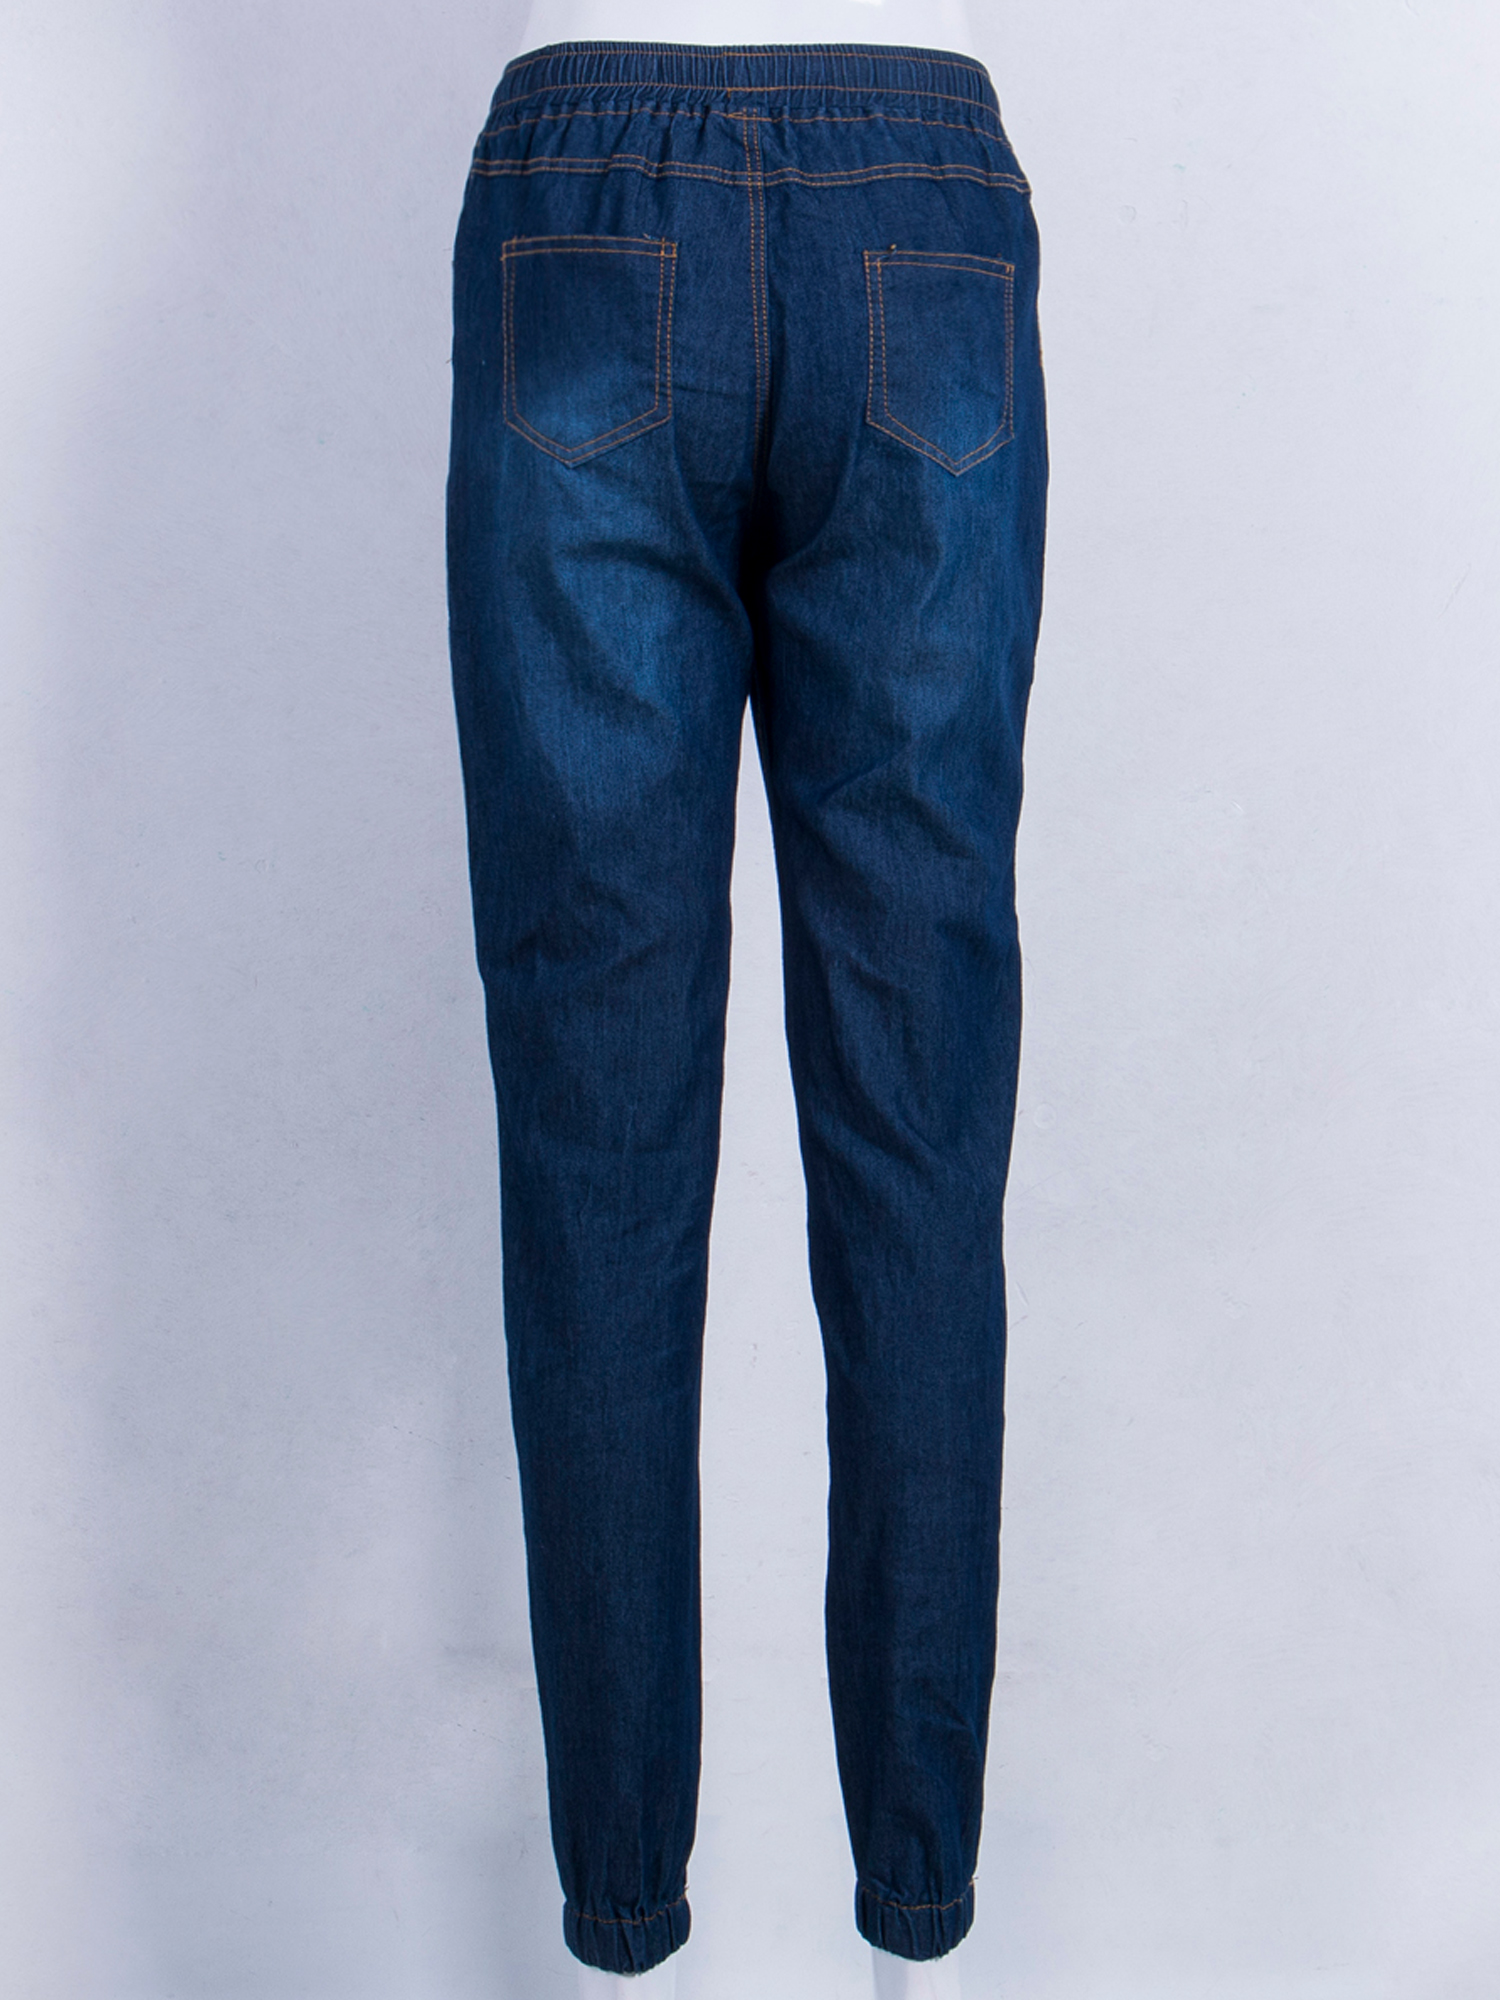 GuliriFei Women's Mid Rise Skinny Jeans Drawstring Elatic Waist Denim Pants - image 3 of 6